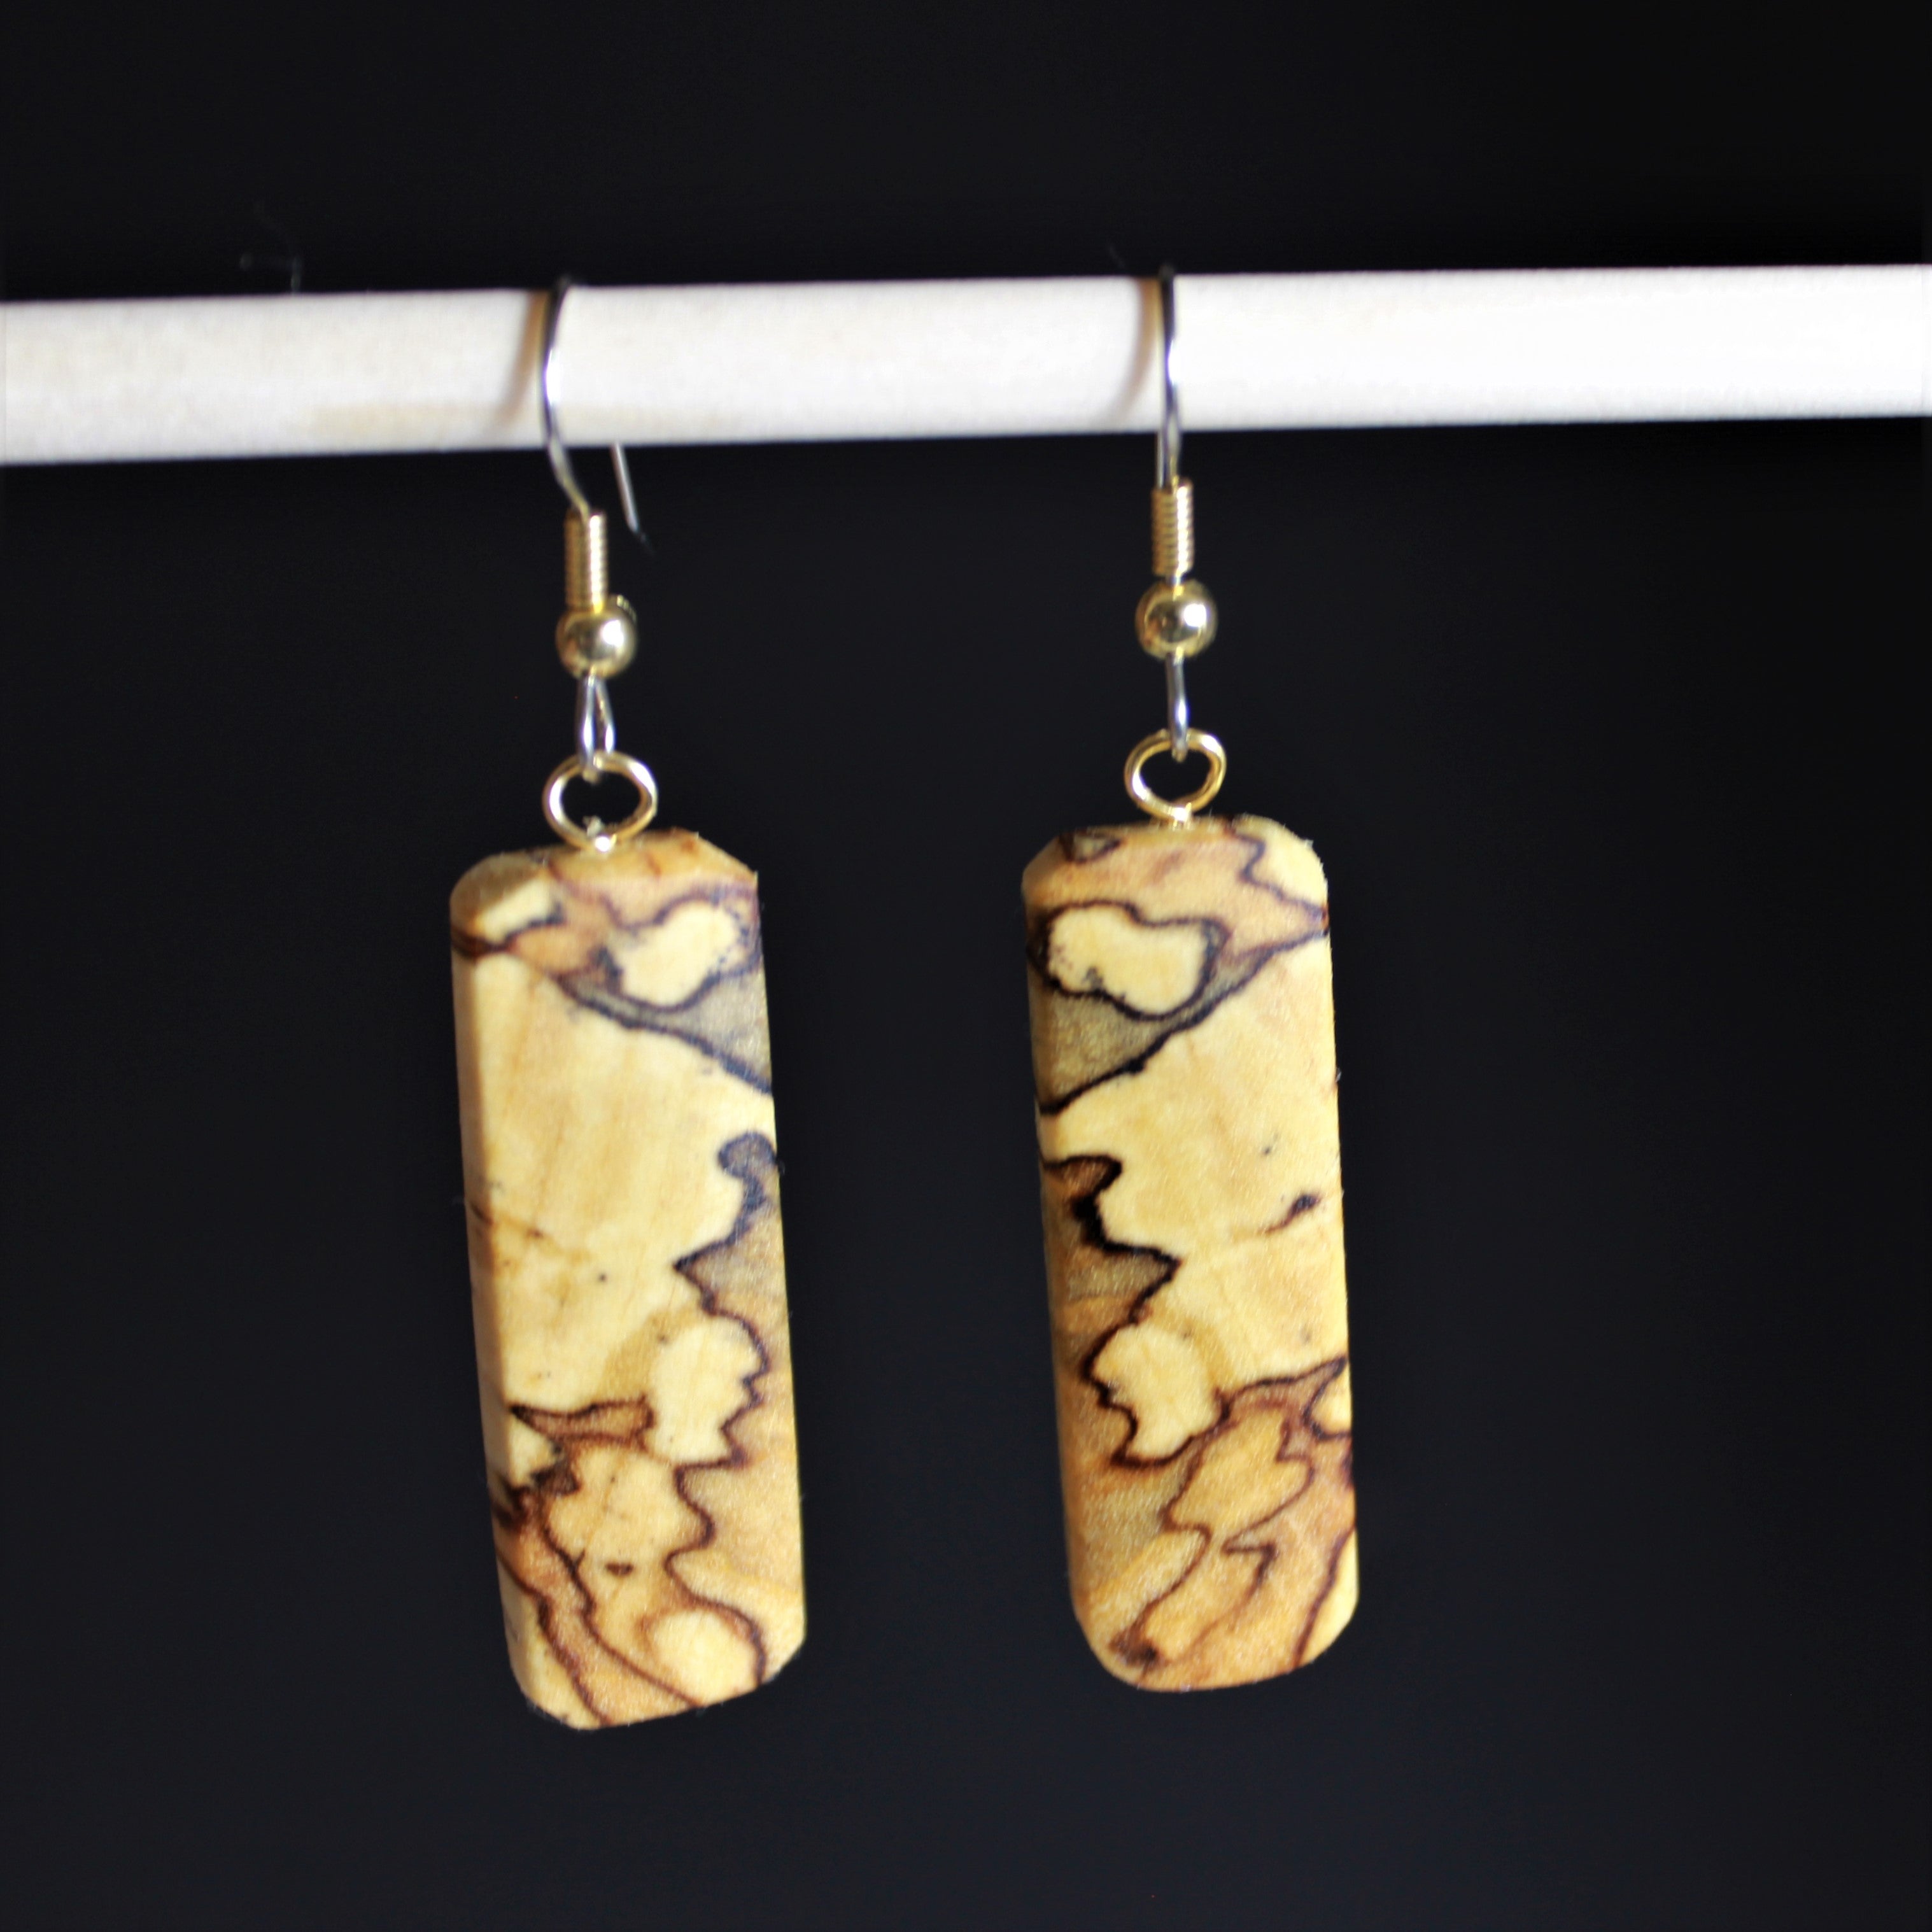 Boreal birch earrings